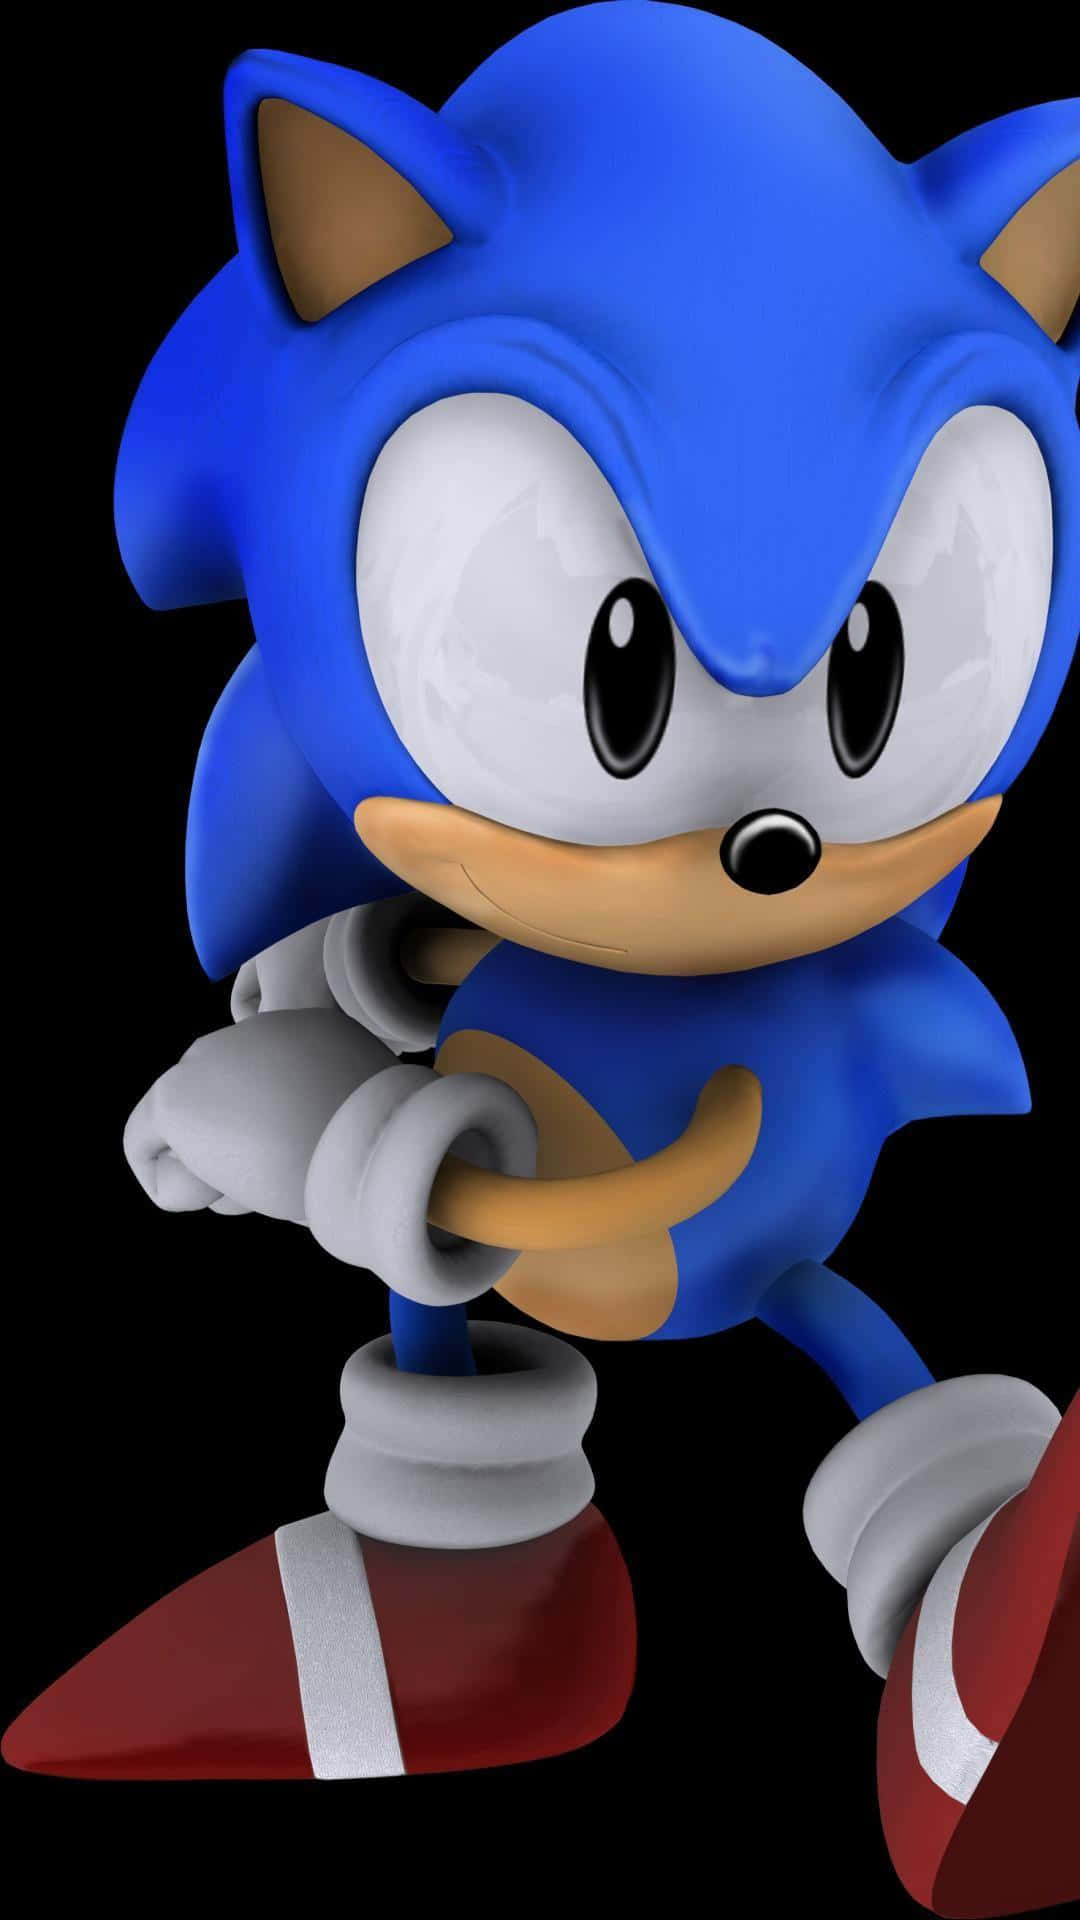 Elúnico E Inigualable: Sonic Clásico.